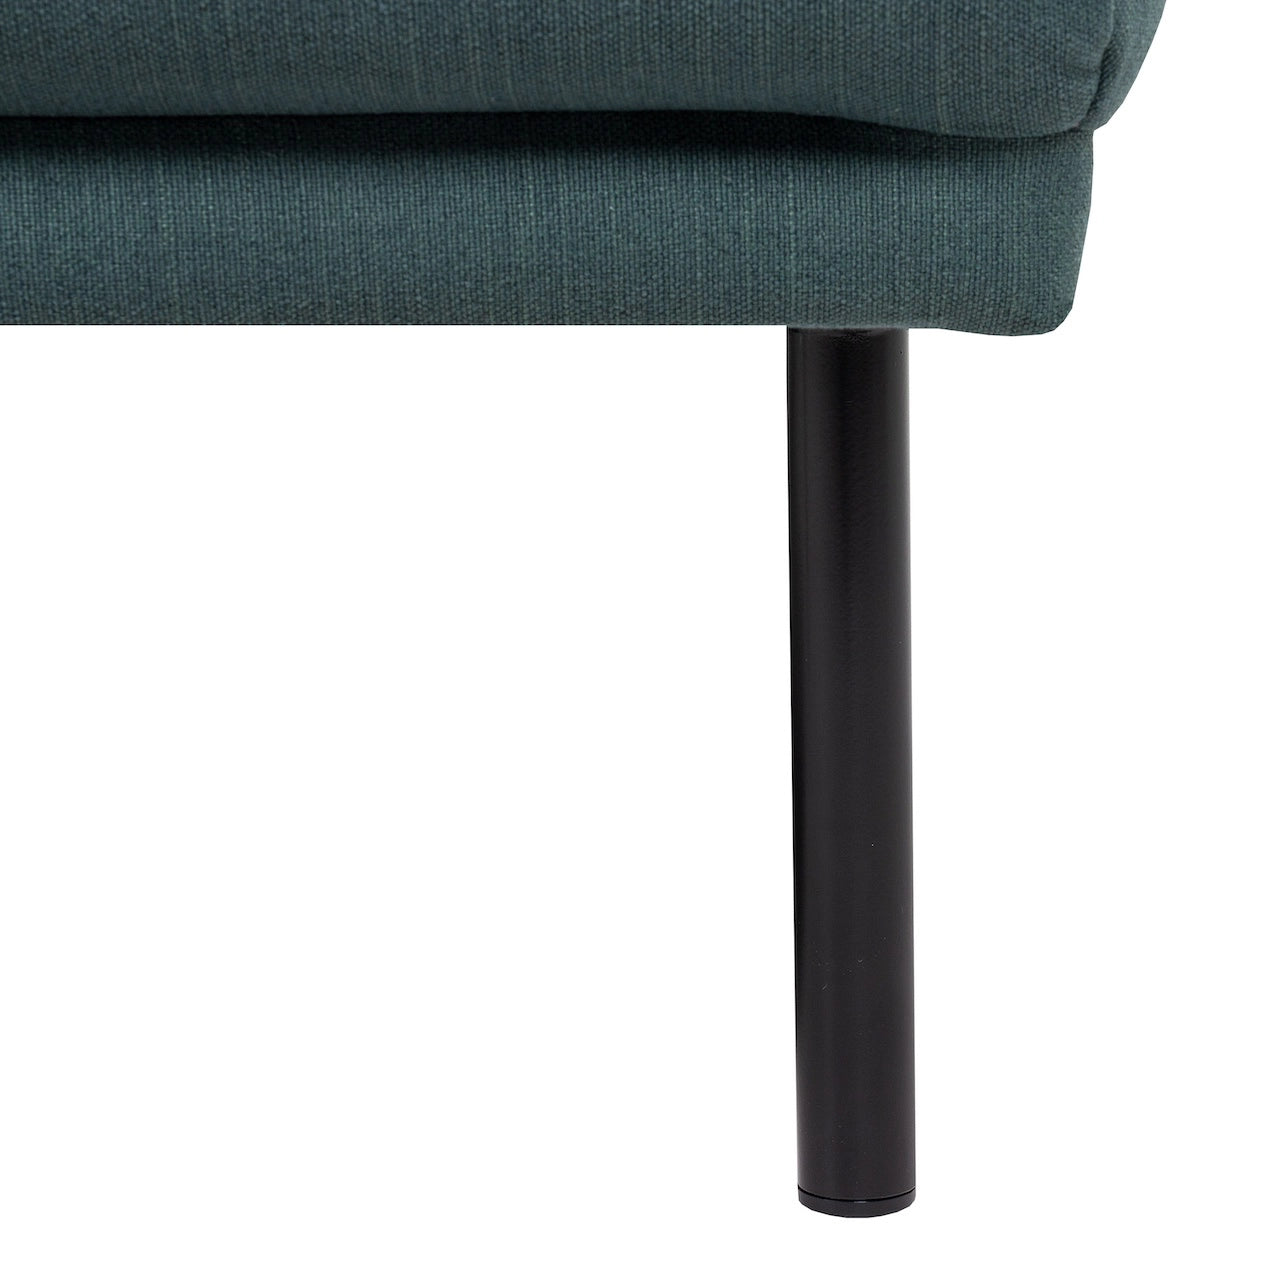 Furniture To Go Larvik Chaiselongue Sofa (RH) - Dark Green, Black Legs